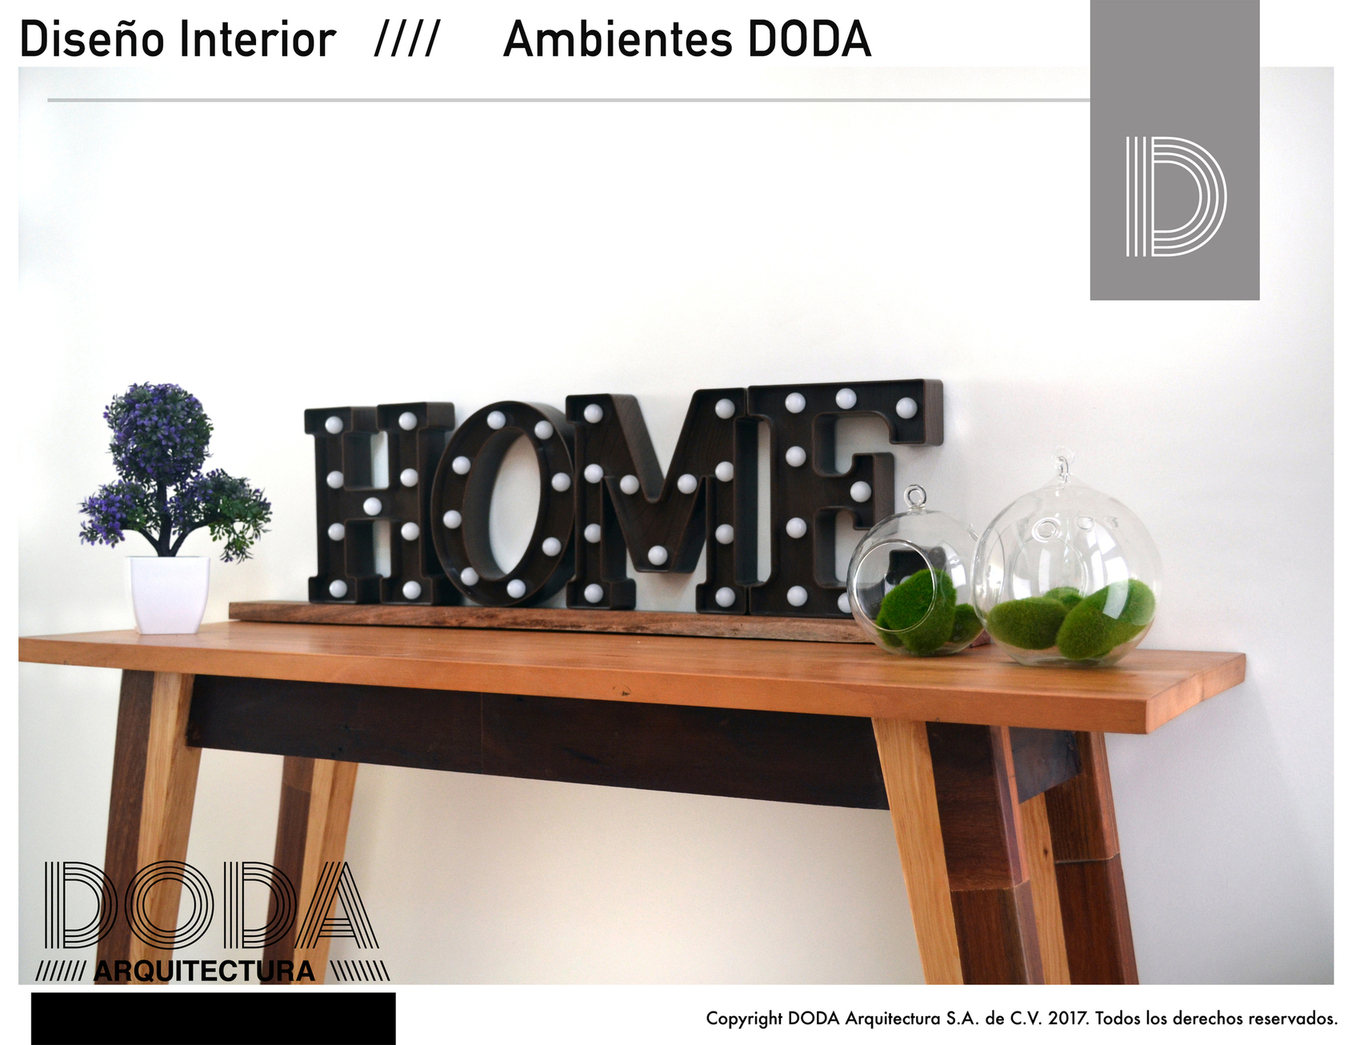 DODA Arquitectura + Diseño